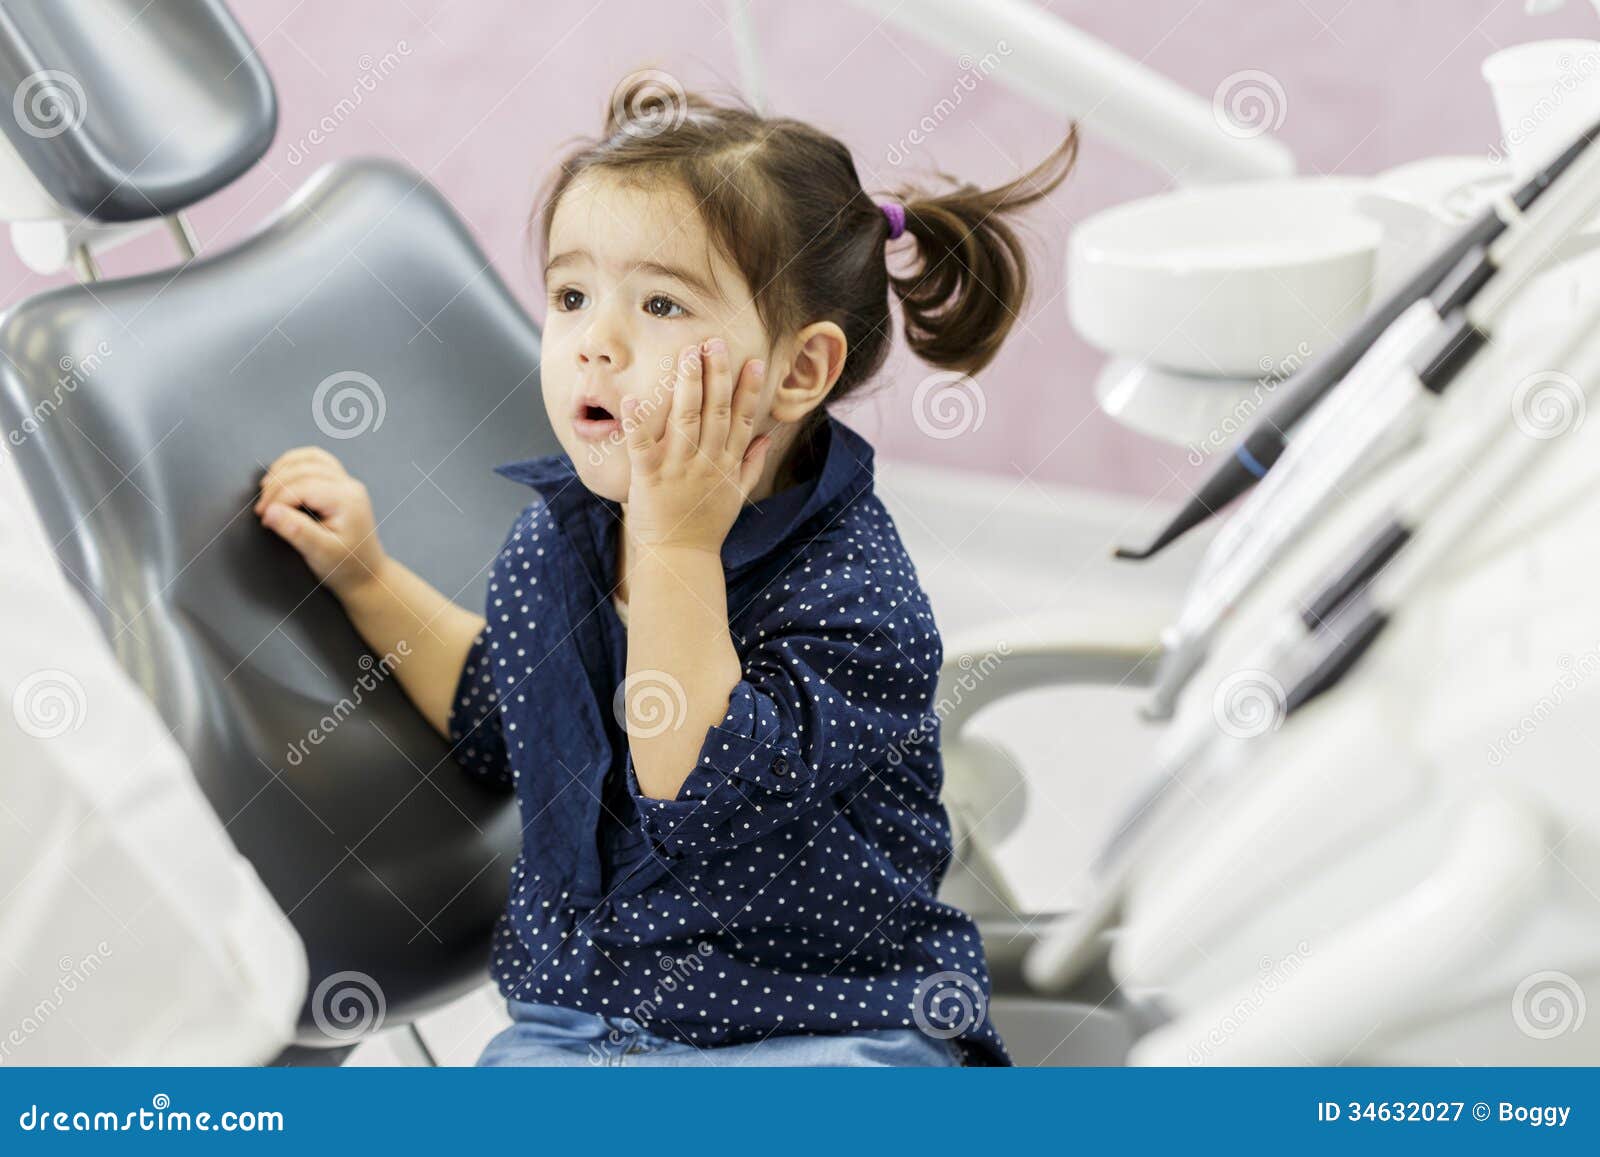 Emergency Dentist For Child